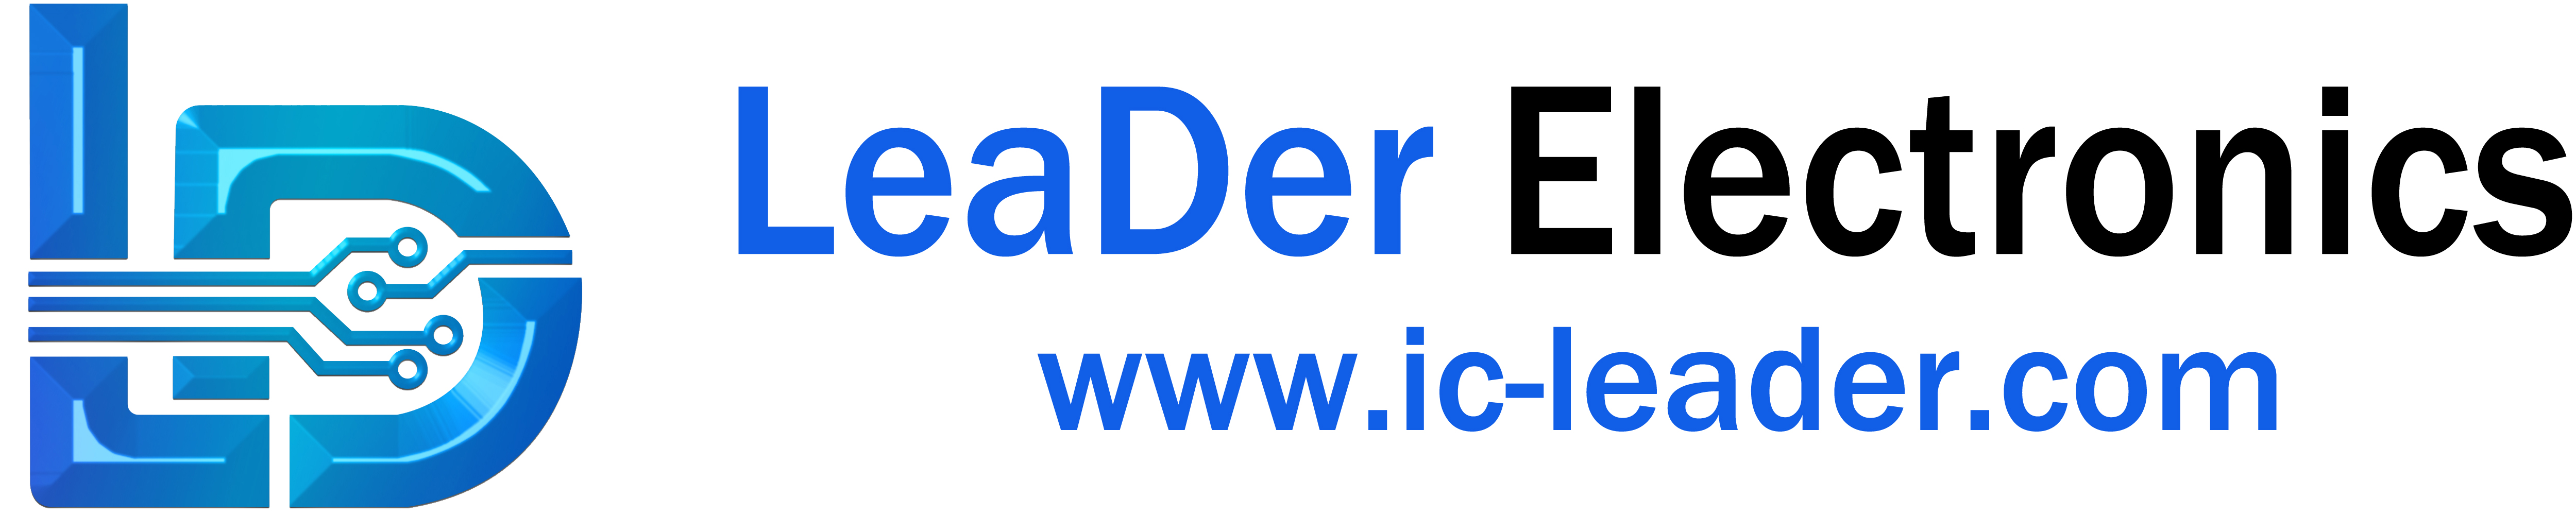 IC-Leader.com